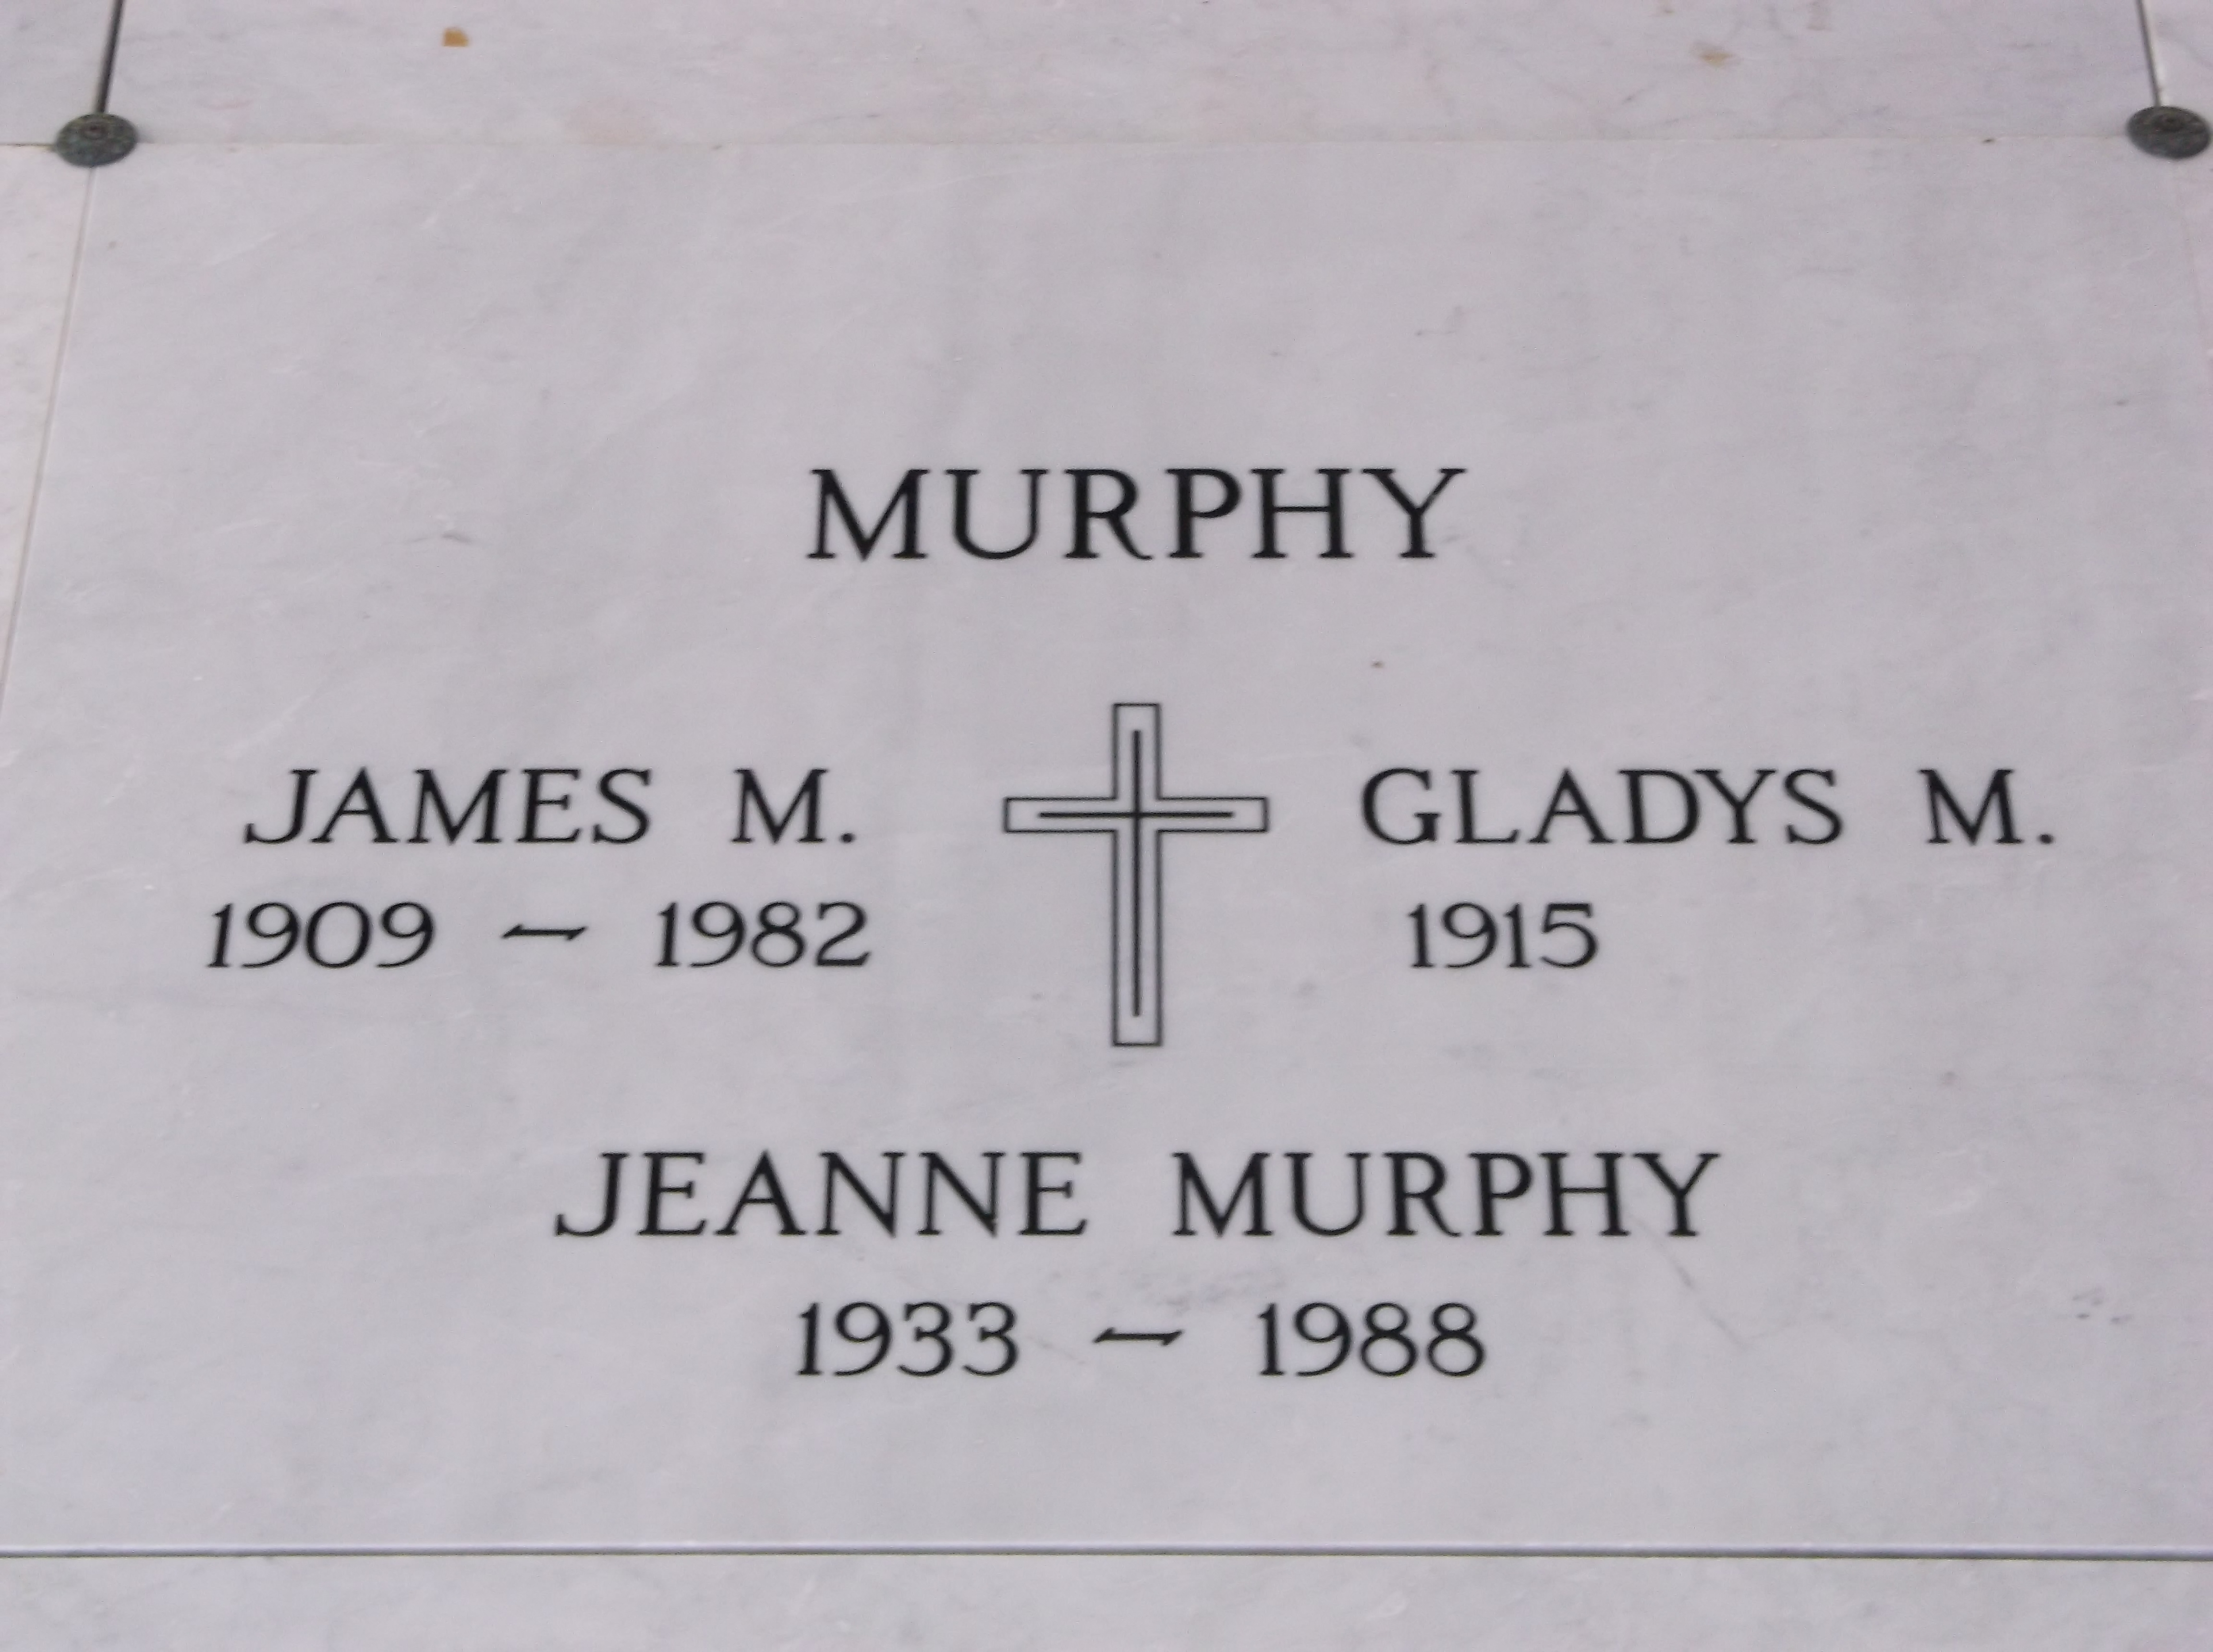 Gladys M Murphy